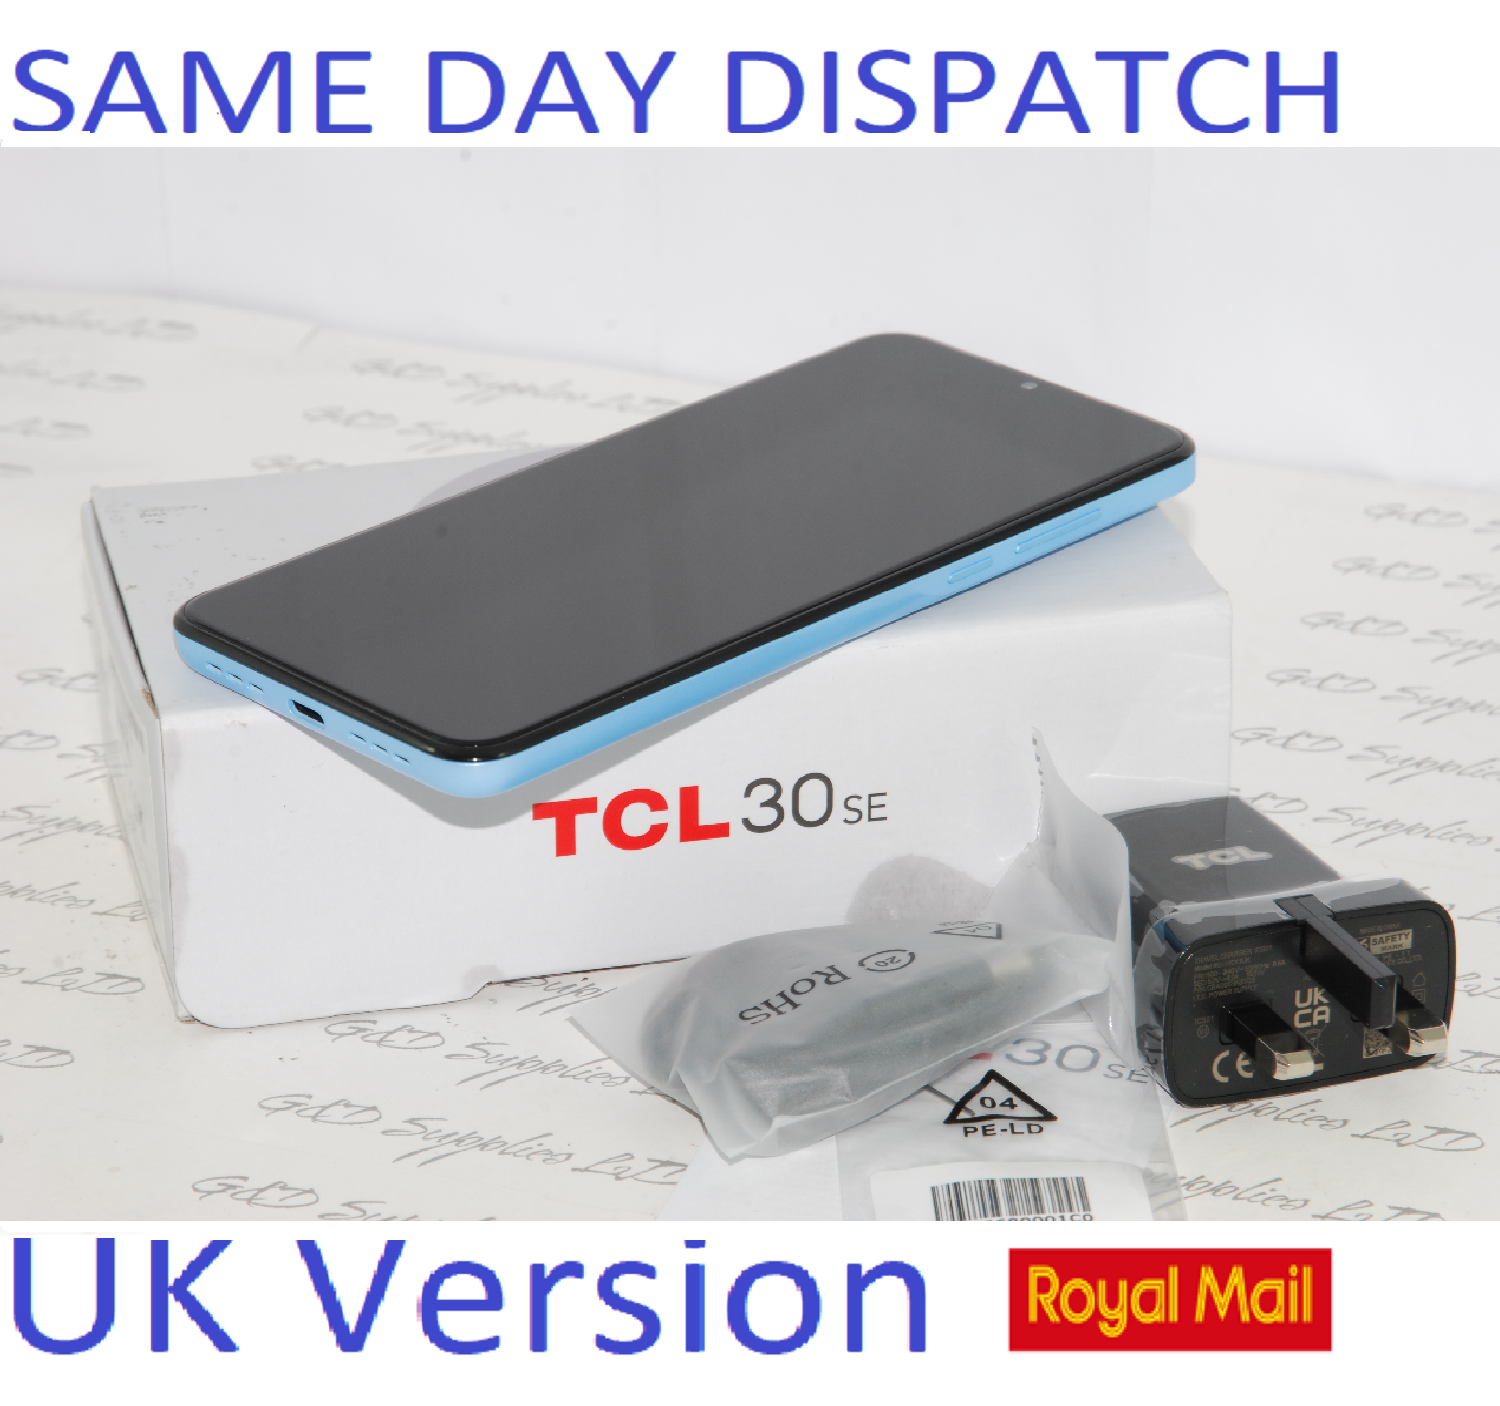 TCL 30 SE 6.52" 64GB 4G  Android Smartphone  4GB RAM Unlocked Dual-Sim - Blue NFC  UK version #